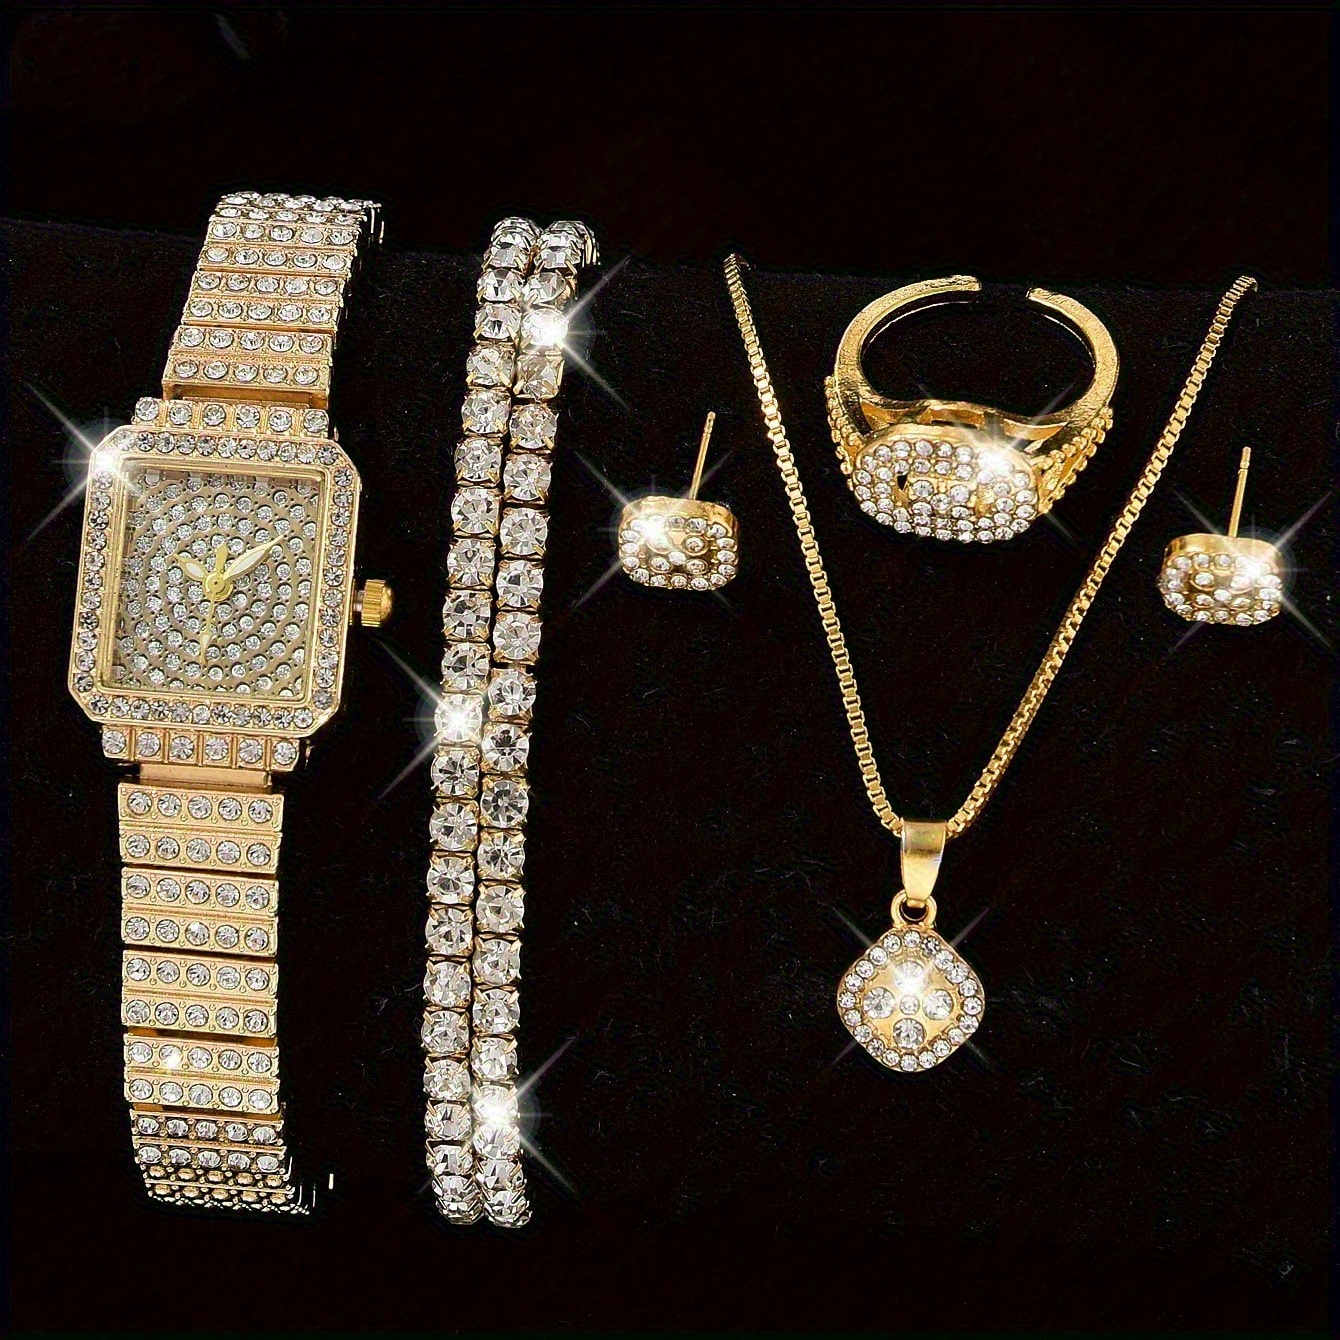 

7pcs/set Women's Shiny Rhinestone Quartz Watch Rectangle Golden Fashion Analog Wrist Watch & Jewelry Set, Gift For Mom Her